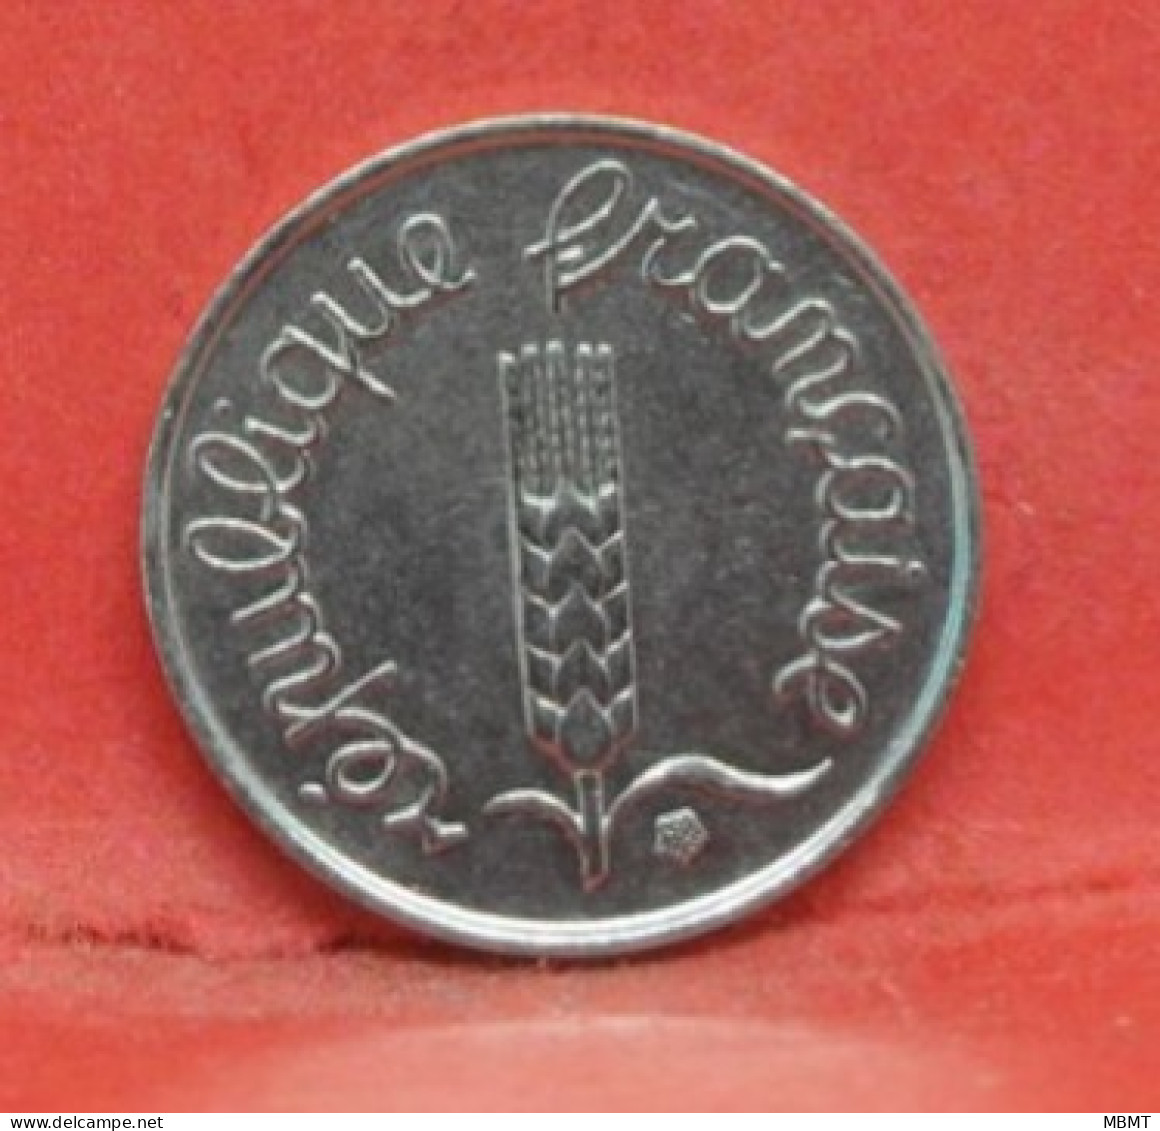 1 Centime épi 1965 - TB - Monnaie France - Article N°8 - 1 Centime